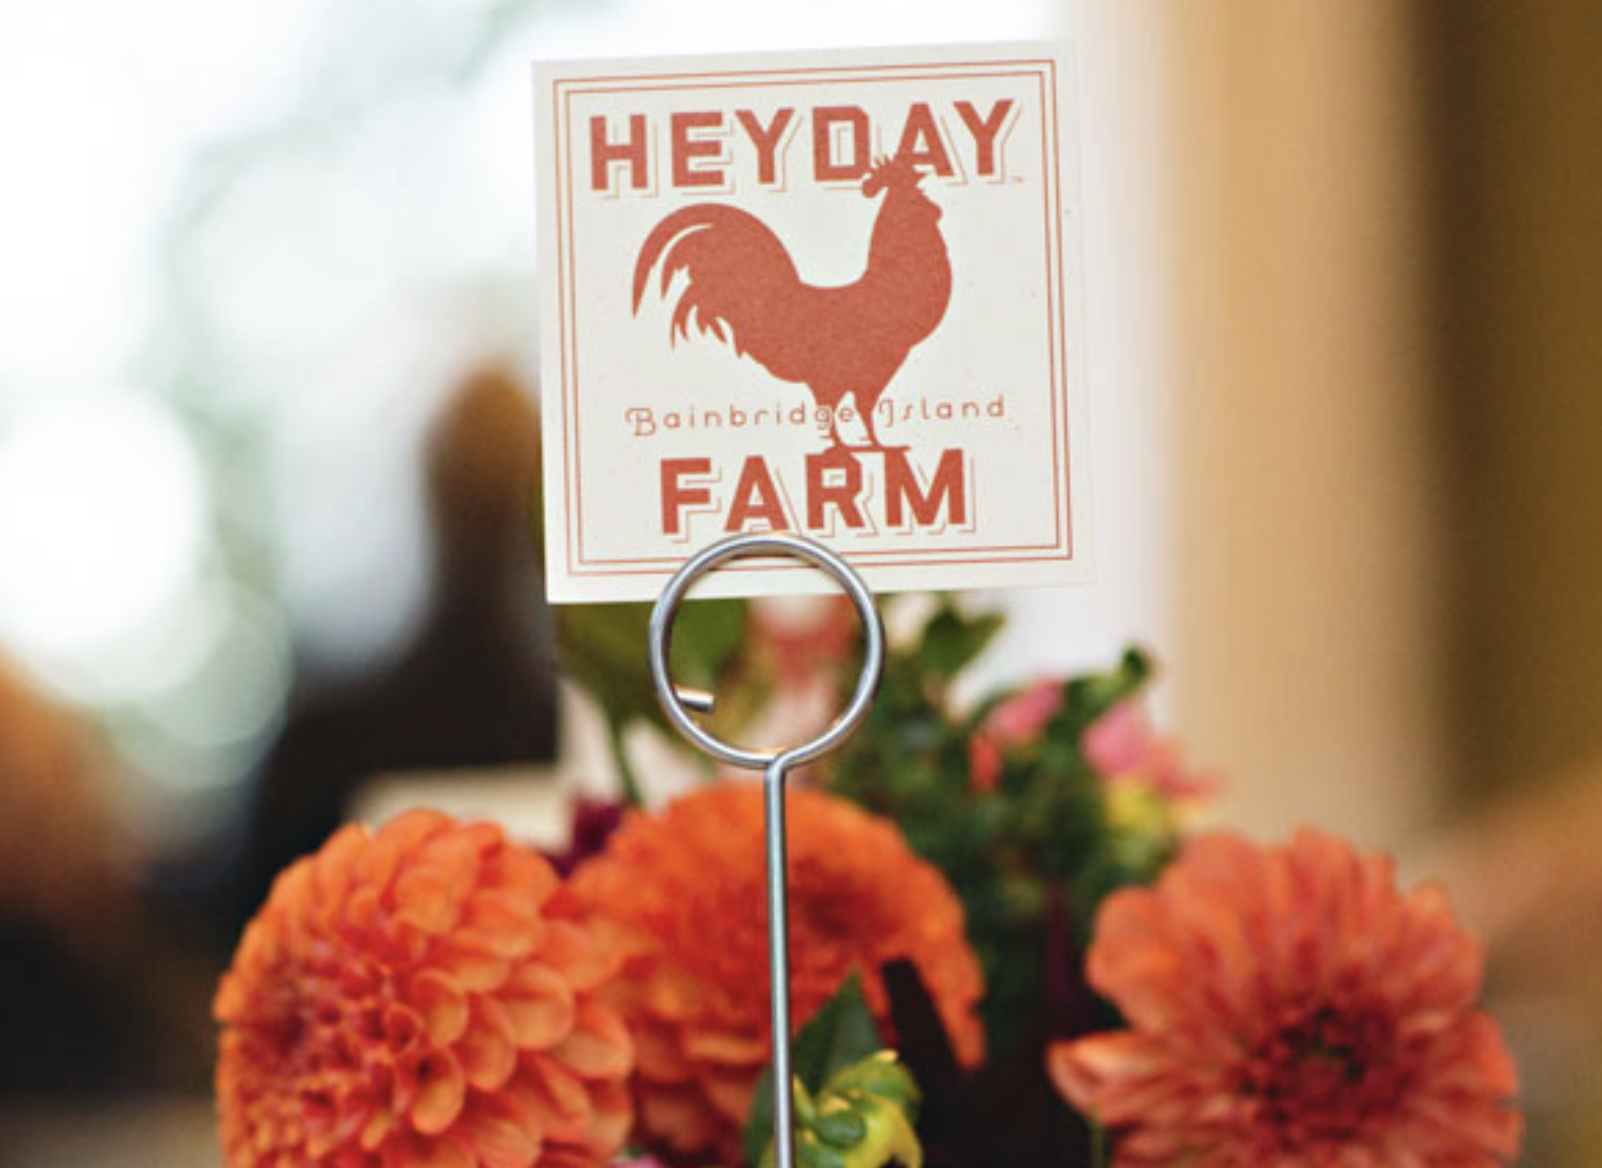 Heyday Farm & Bakery